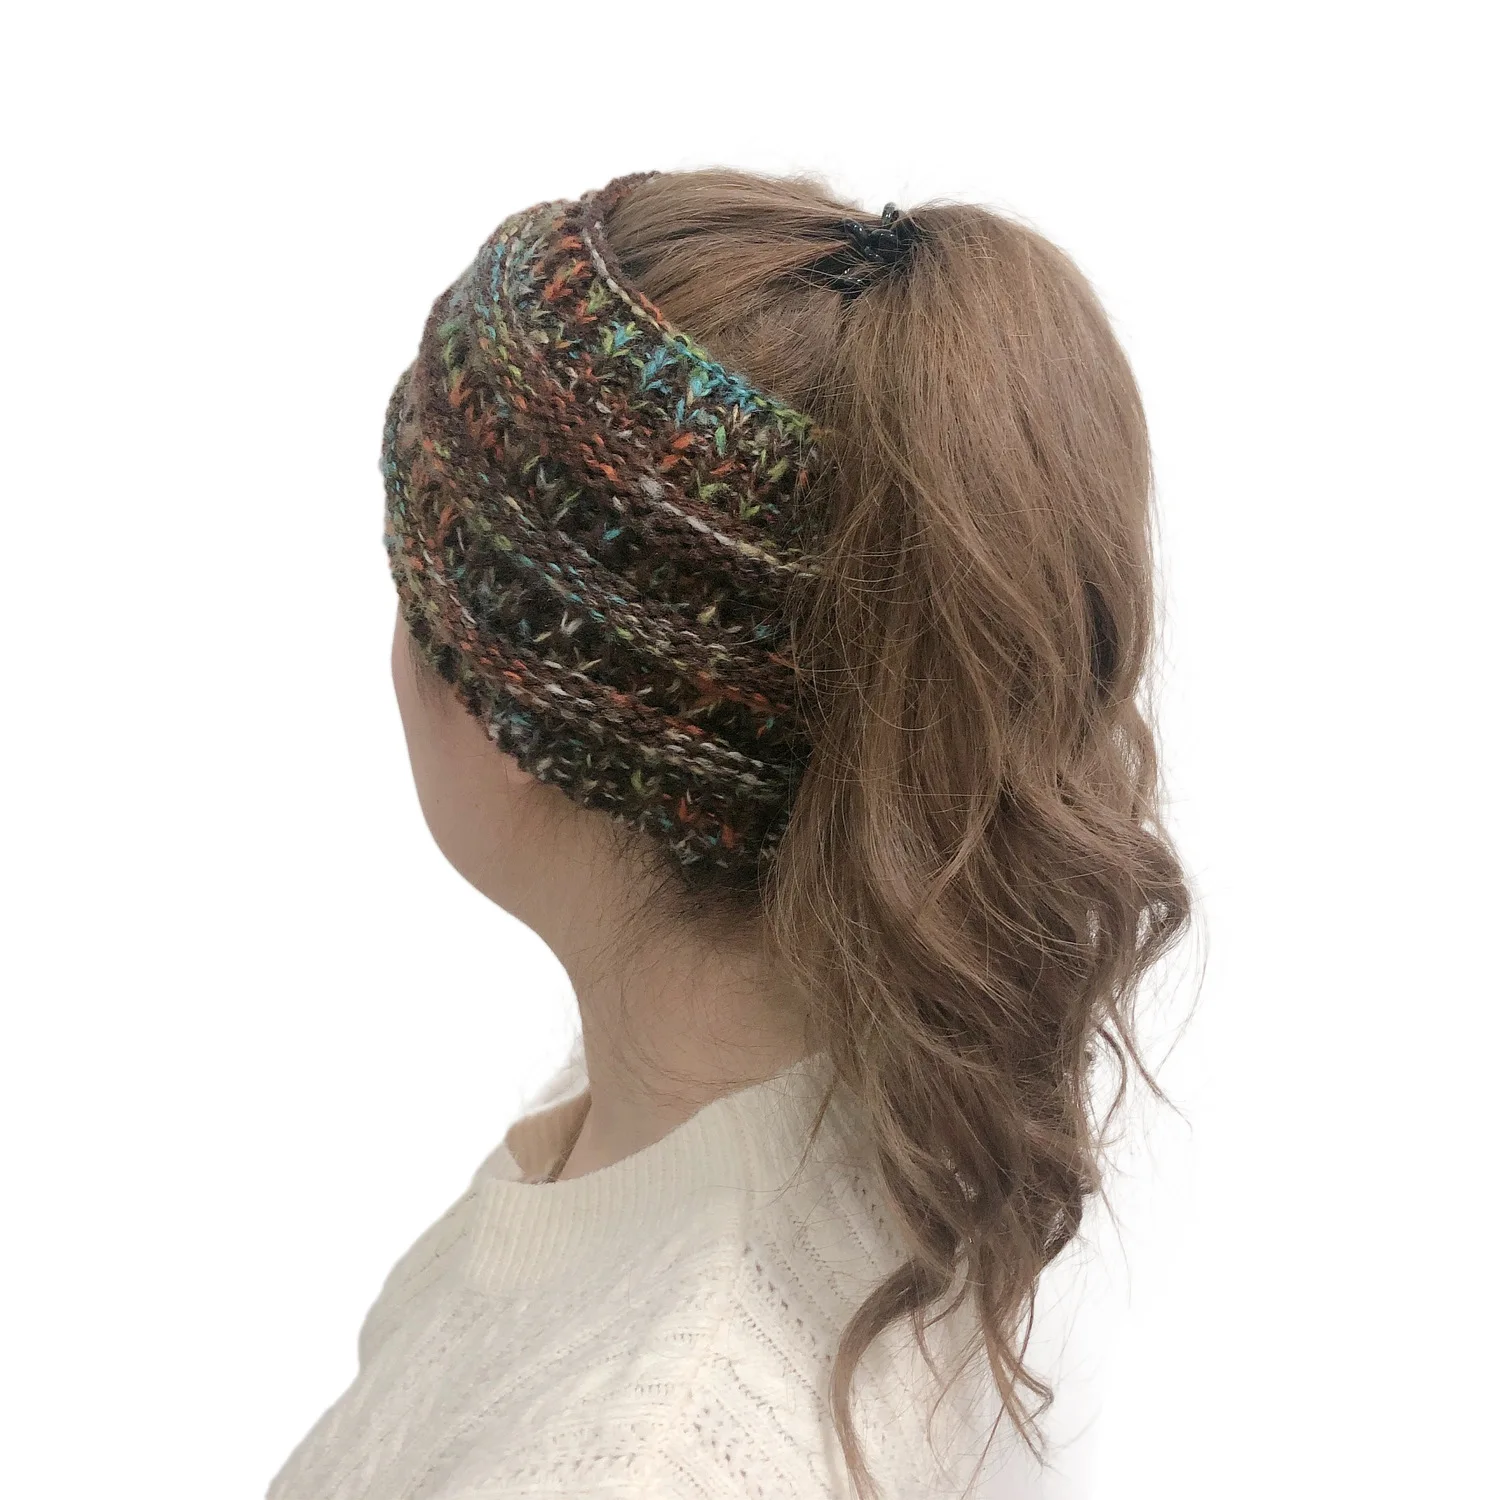 Разноцветная зимняя теплая однотонная вязаная повязка на голову для женщин, женская шерстяная вязаная повязка на голову, головной убор, широкая бандана, тюрбан, фланелевая